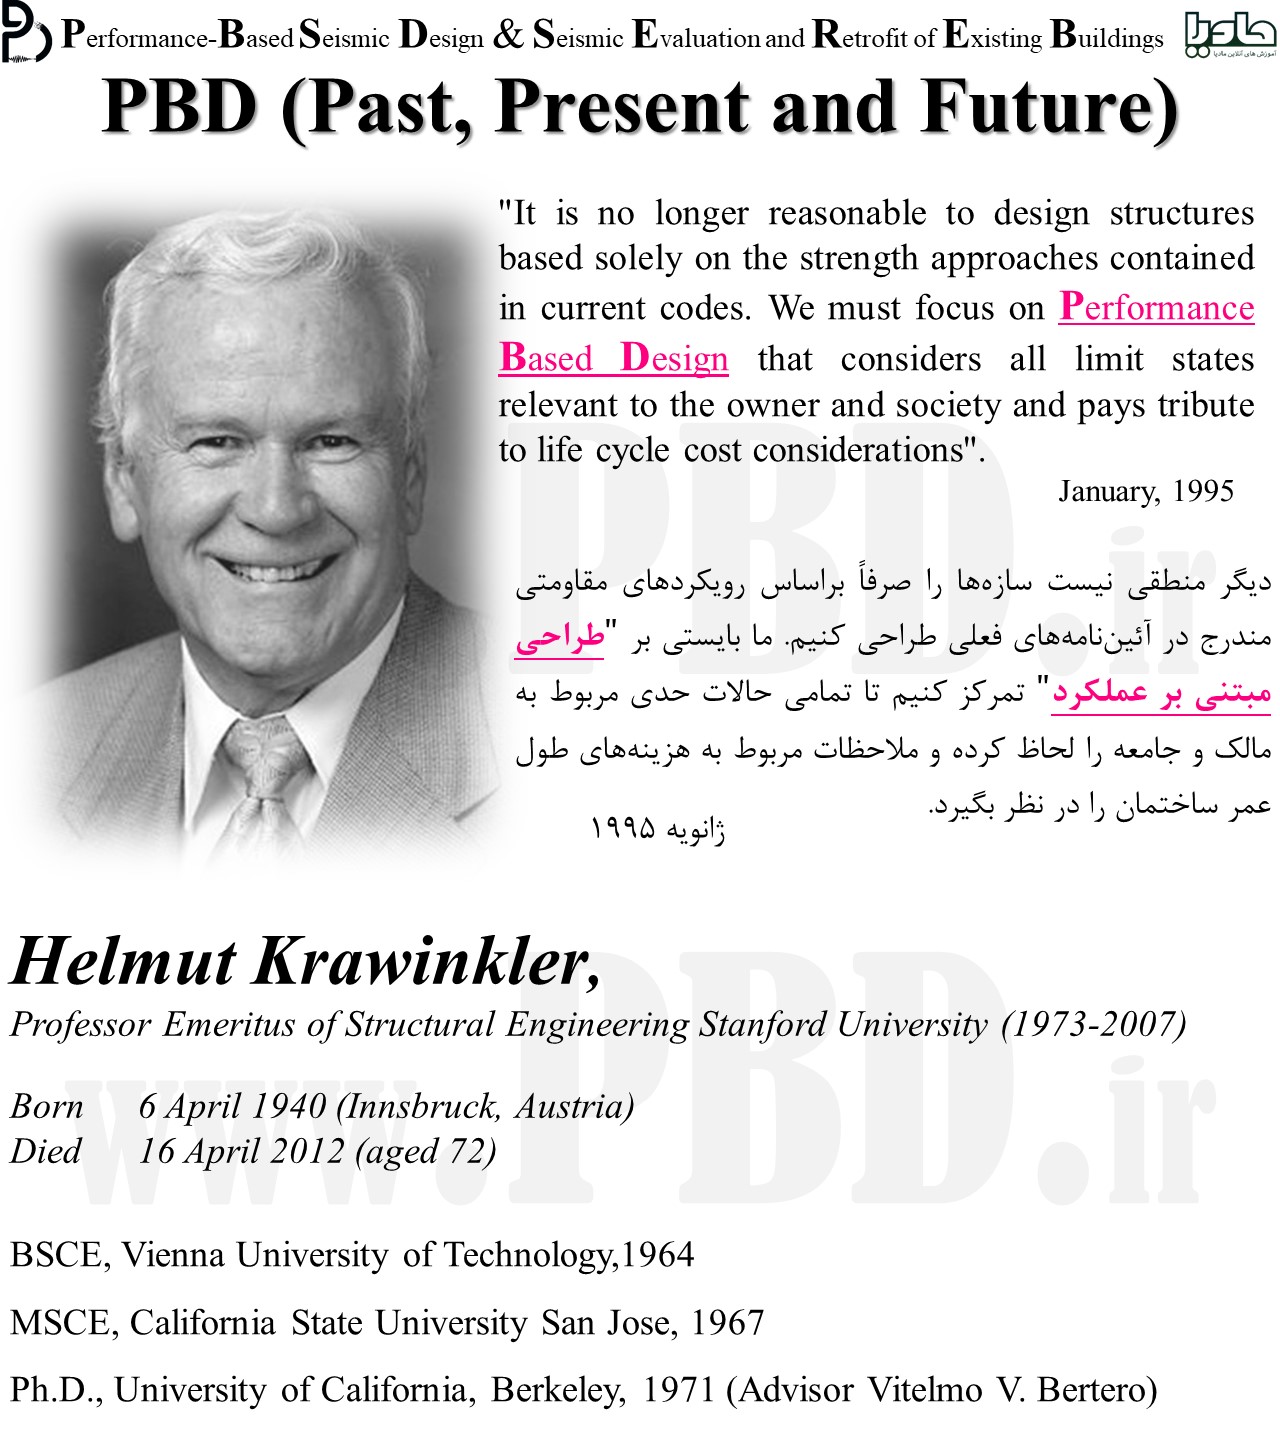 Helmut Krawinkler, Professor Emeritus of Structural Engineering Stanford University (1973-2007)